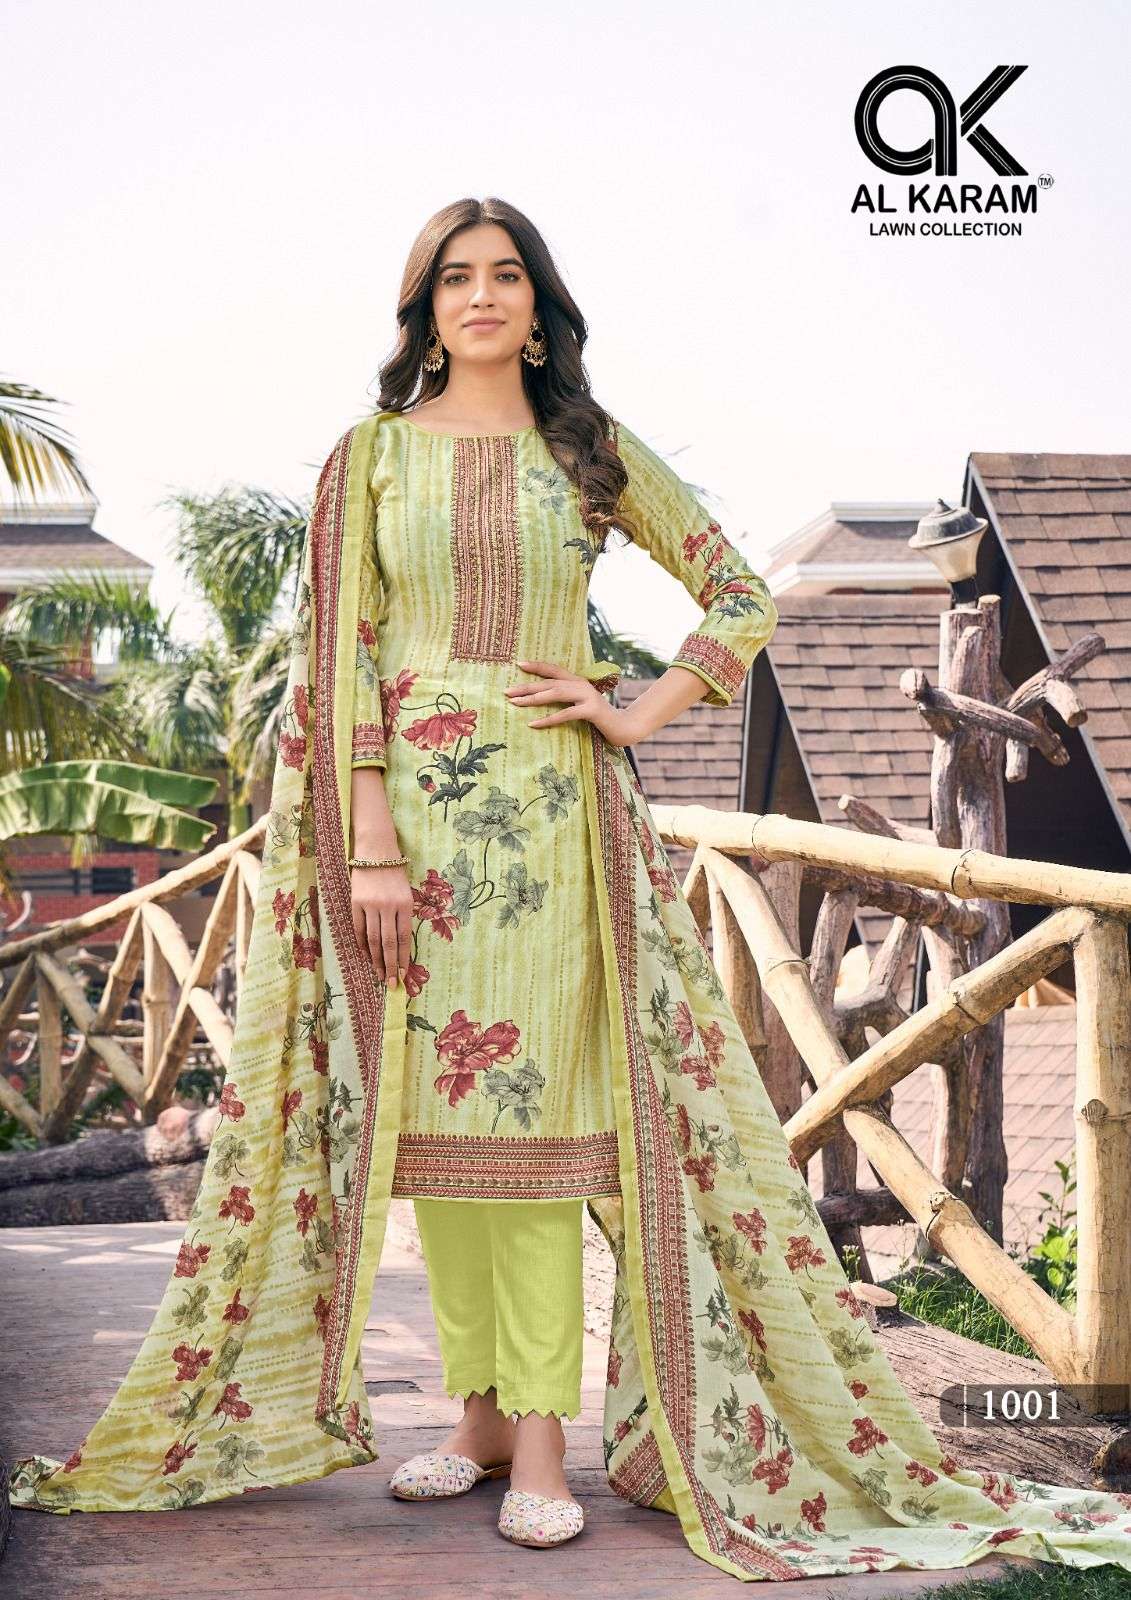 al karam shanaya 1001-1008 series fancy designer salwar kameez dress material manufacturer surat